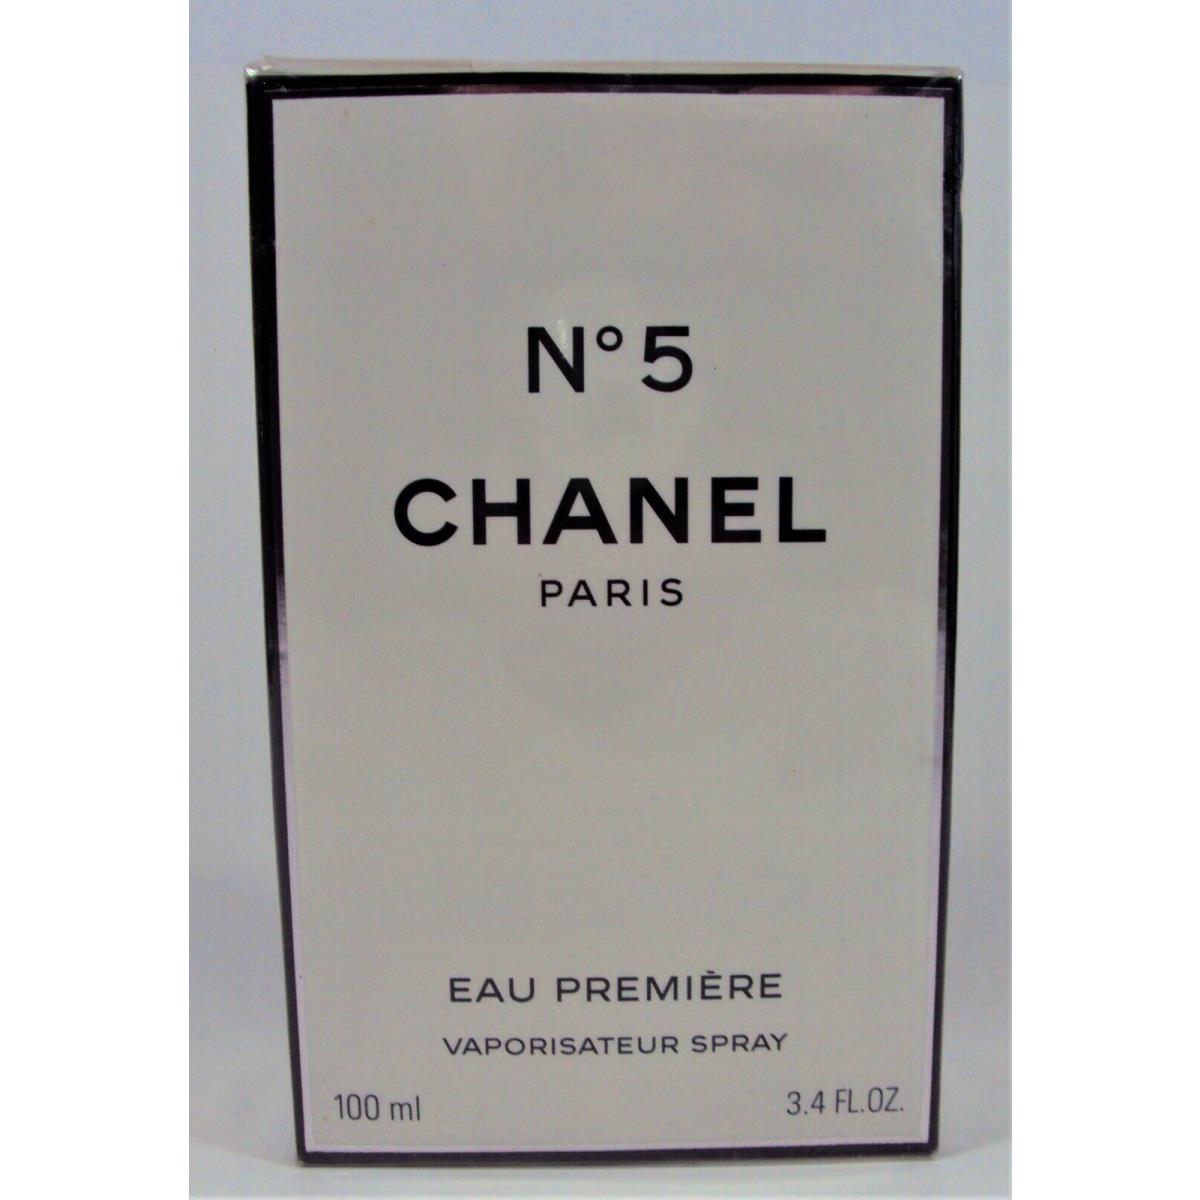 Chanel No 5 Eau Premiere 3.4 oz / 100 ml Edp Spray 2014